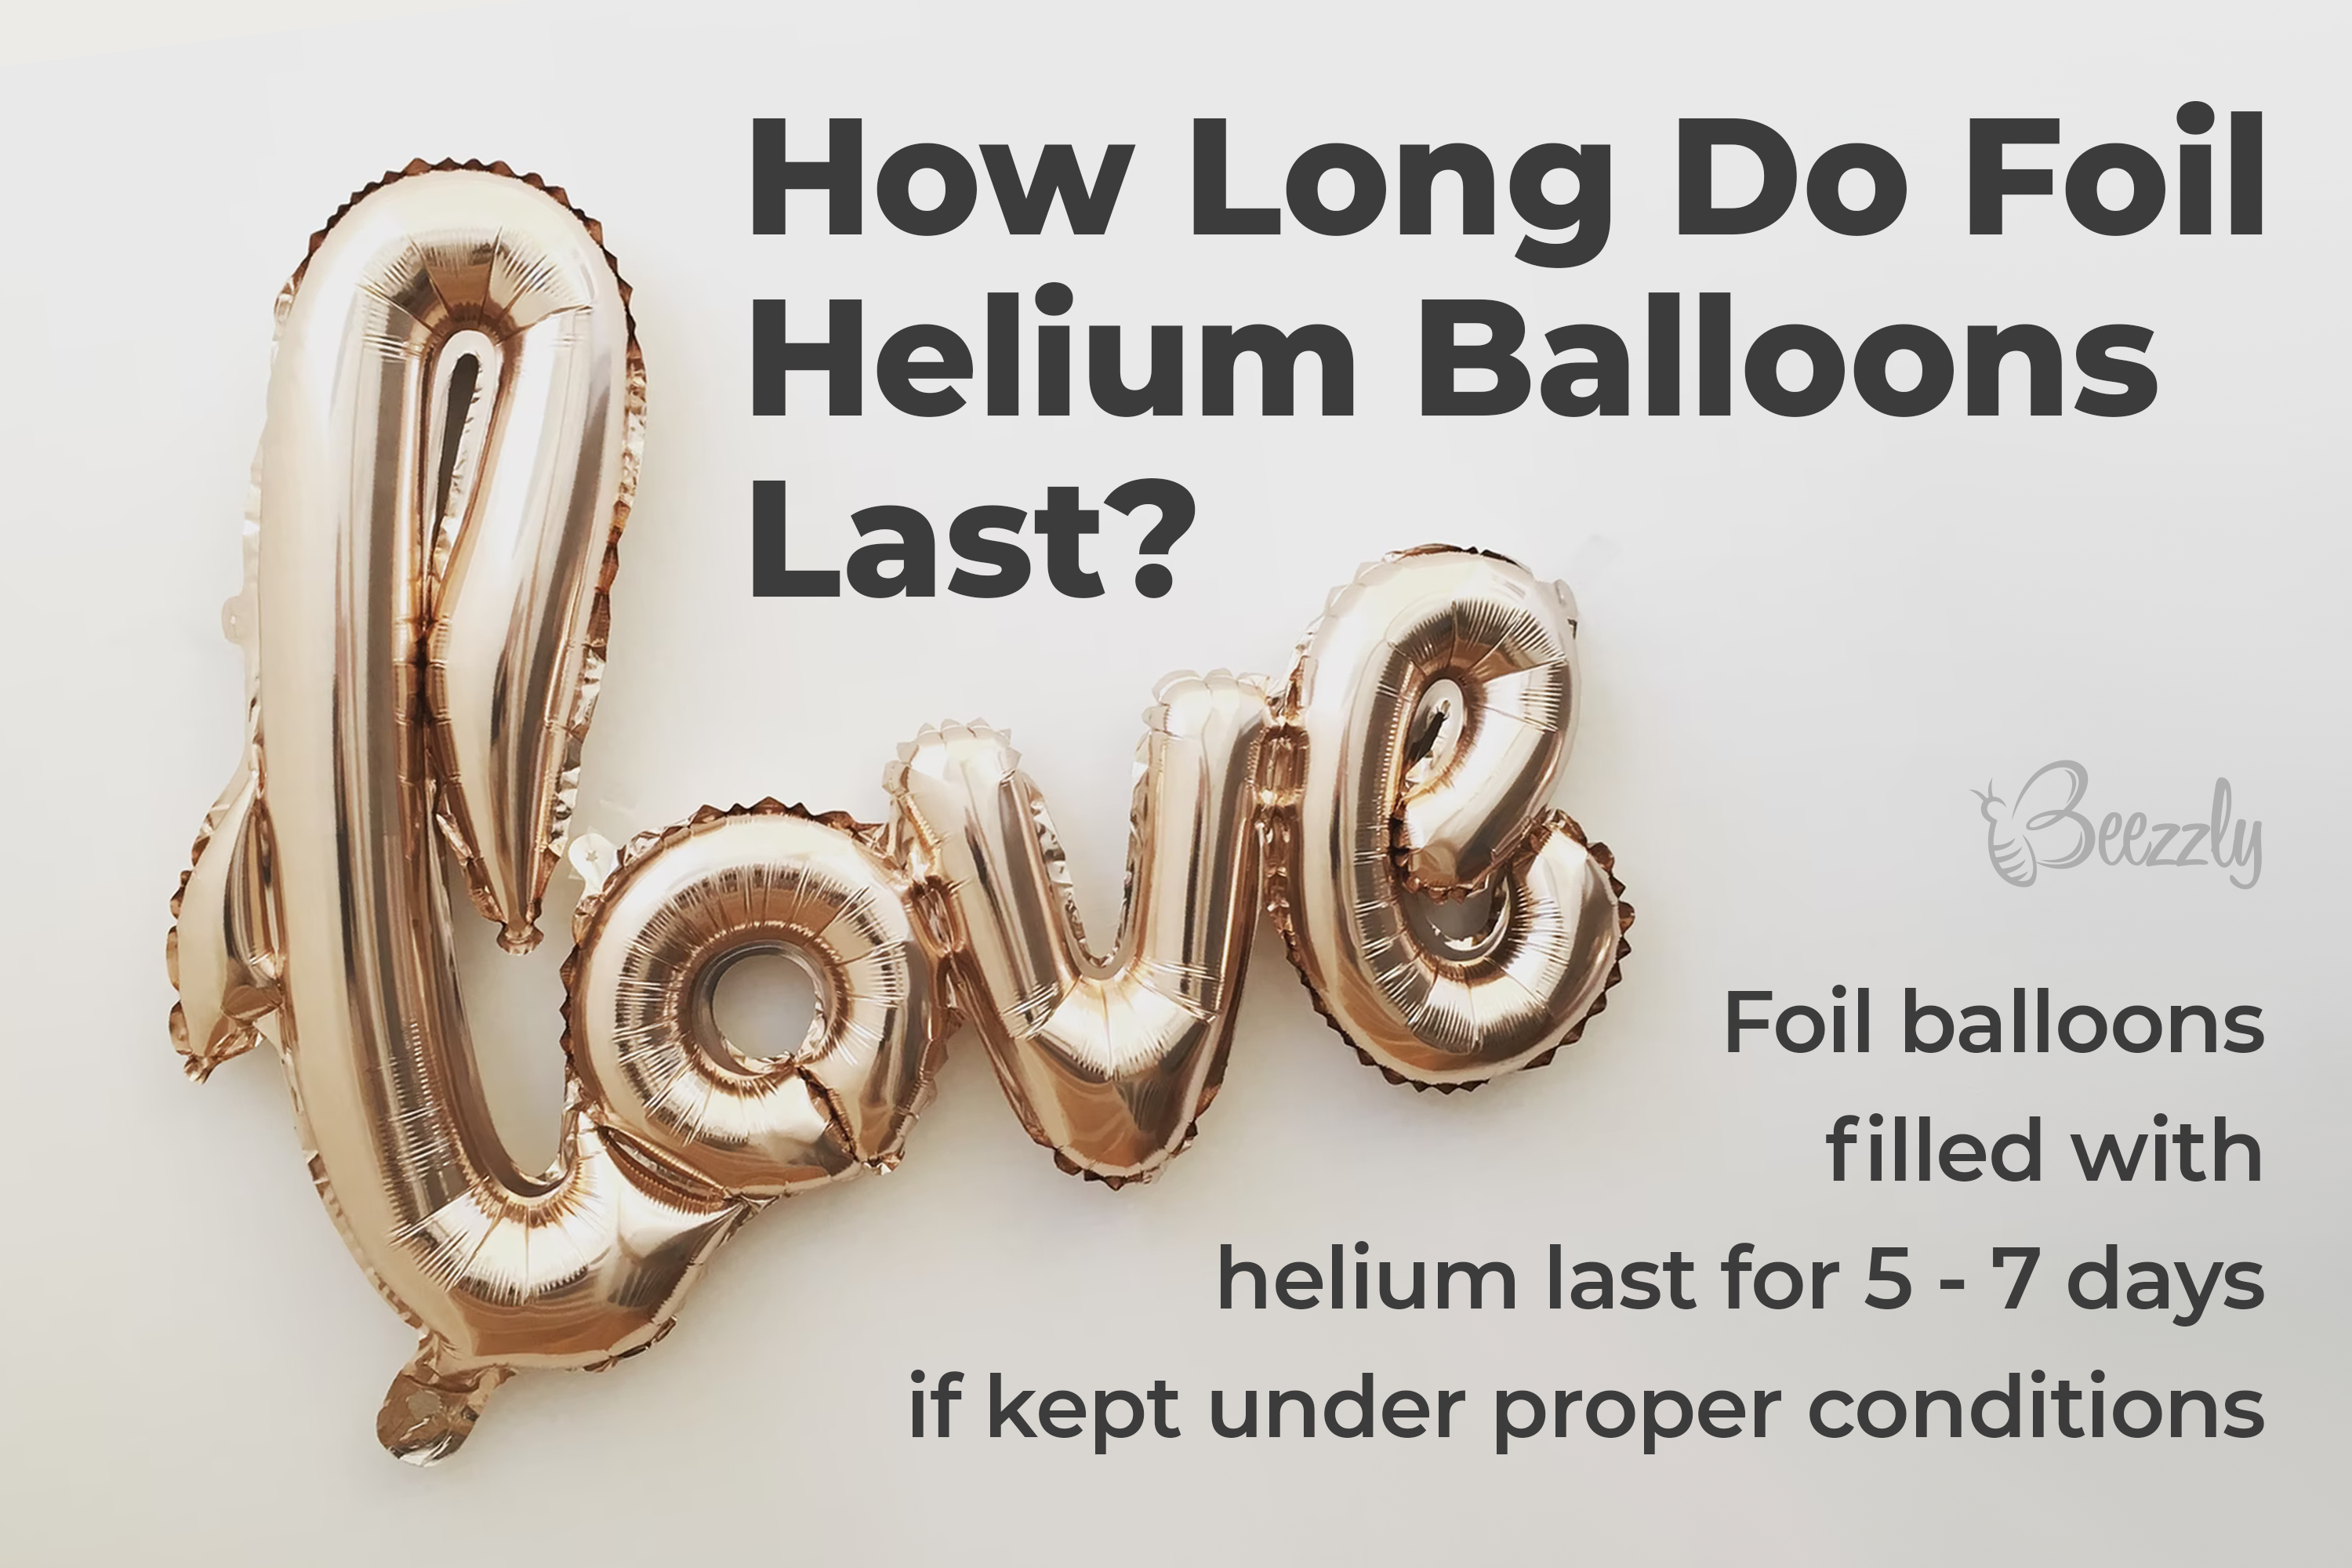 How Long Do Foil Helium Balloons Last